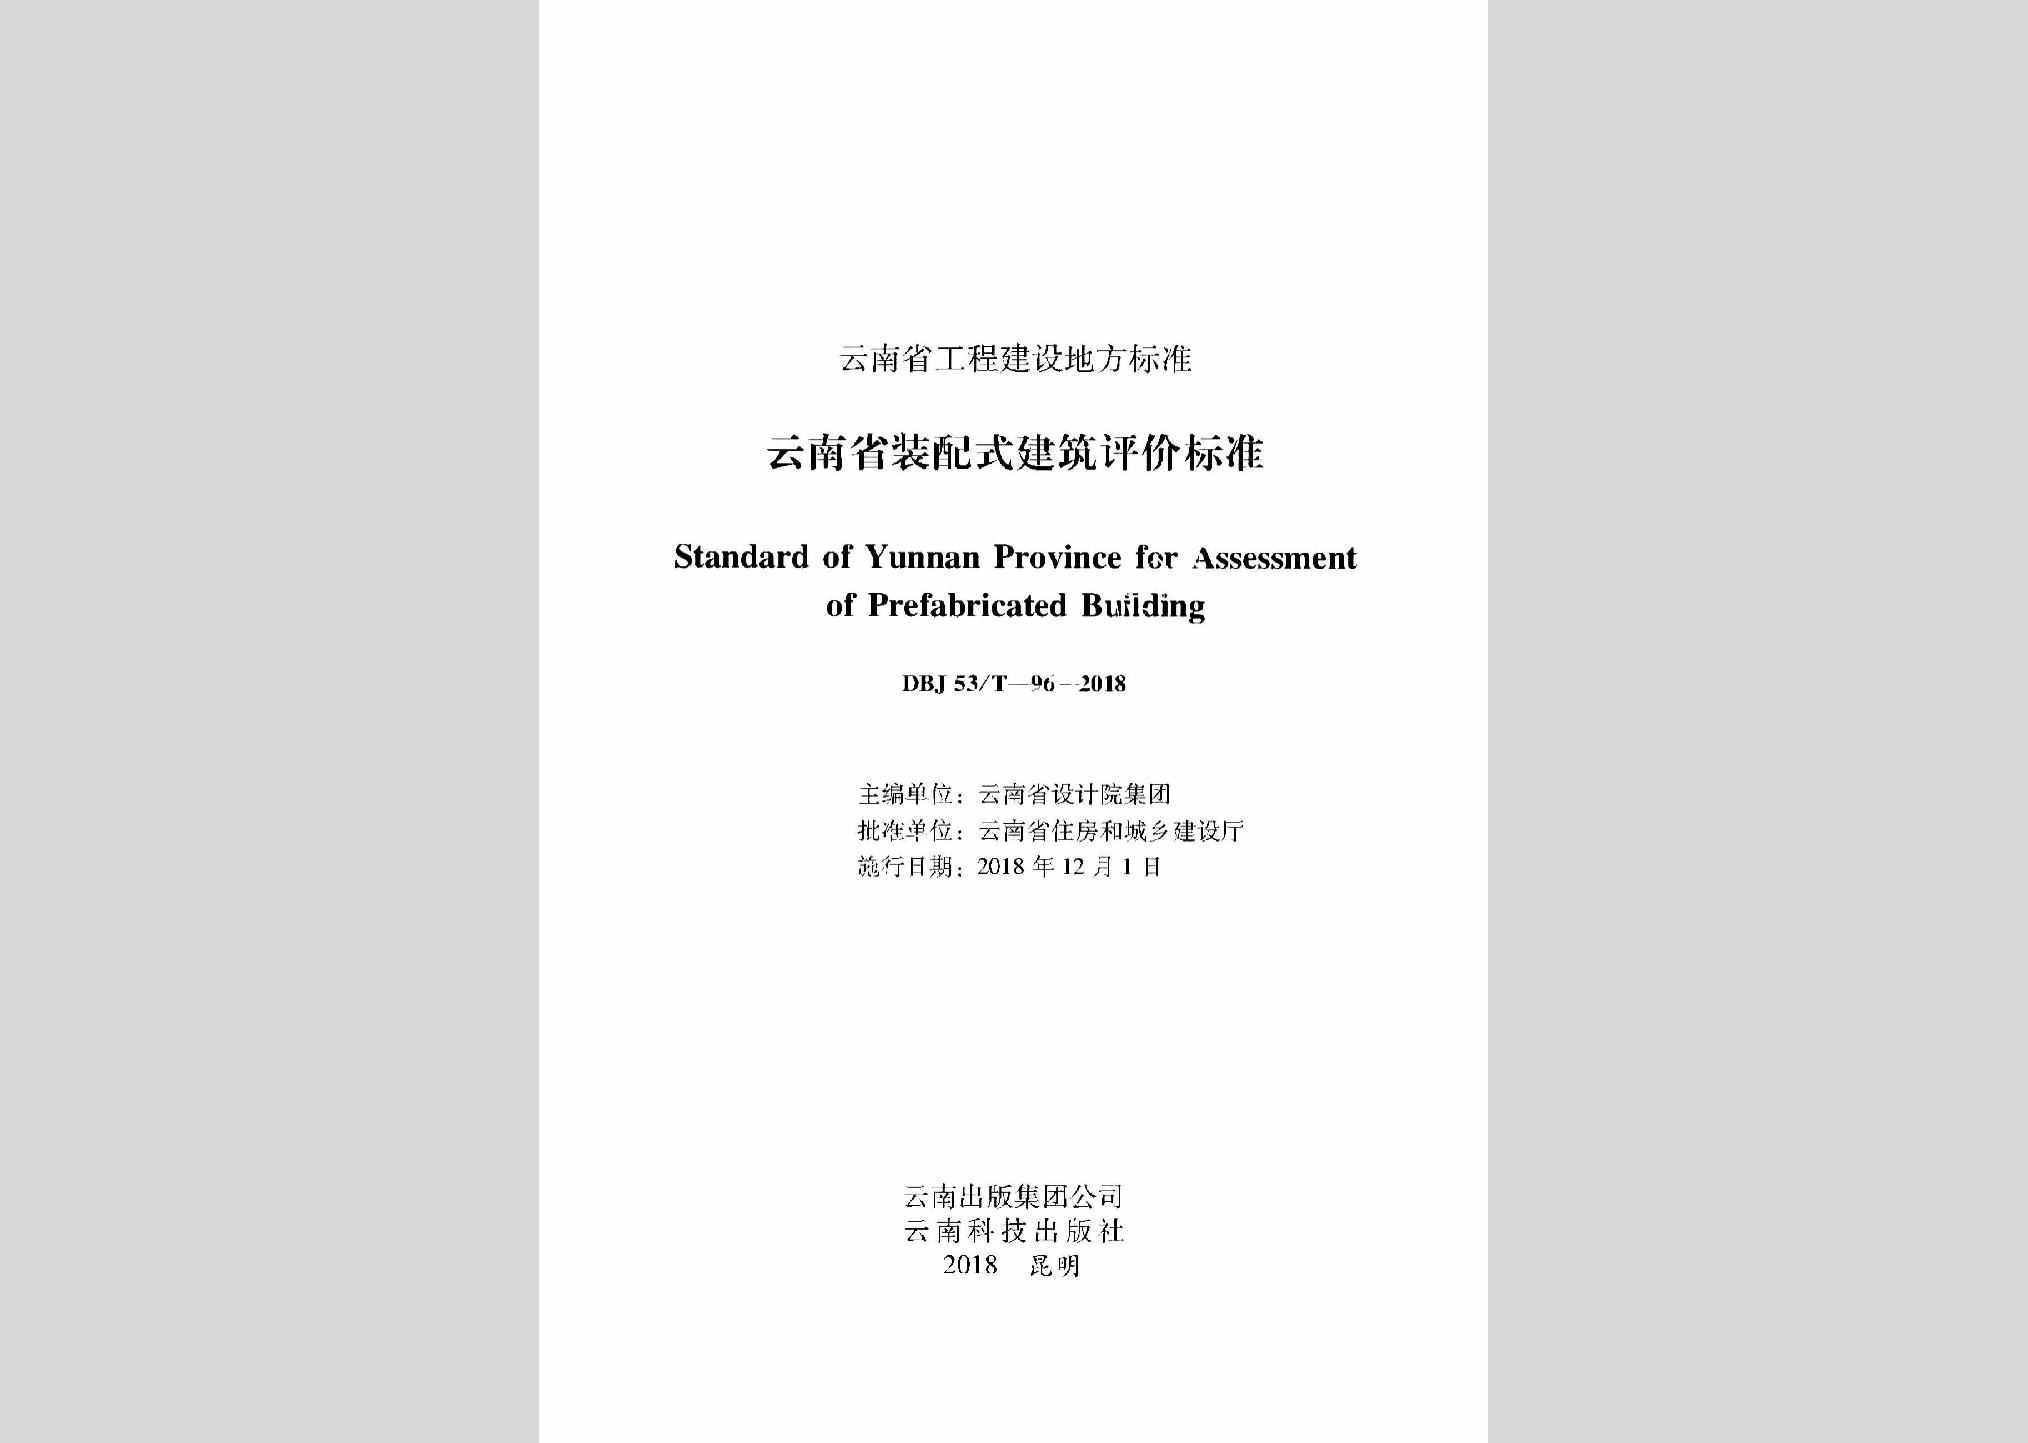 DBJ53/T-96-2018：云南省装配式建筑评价标准